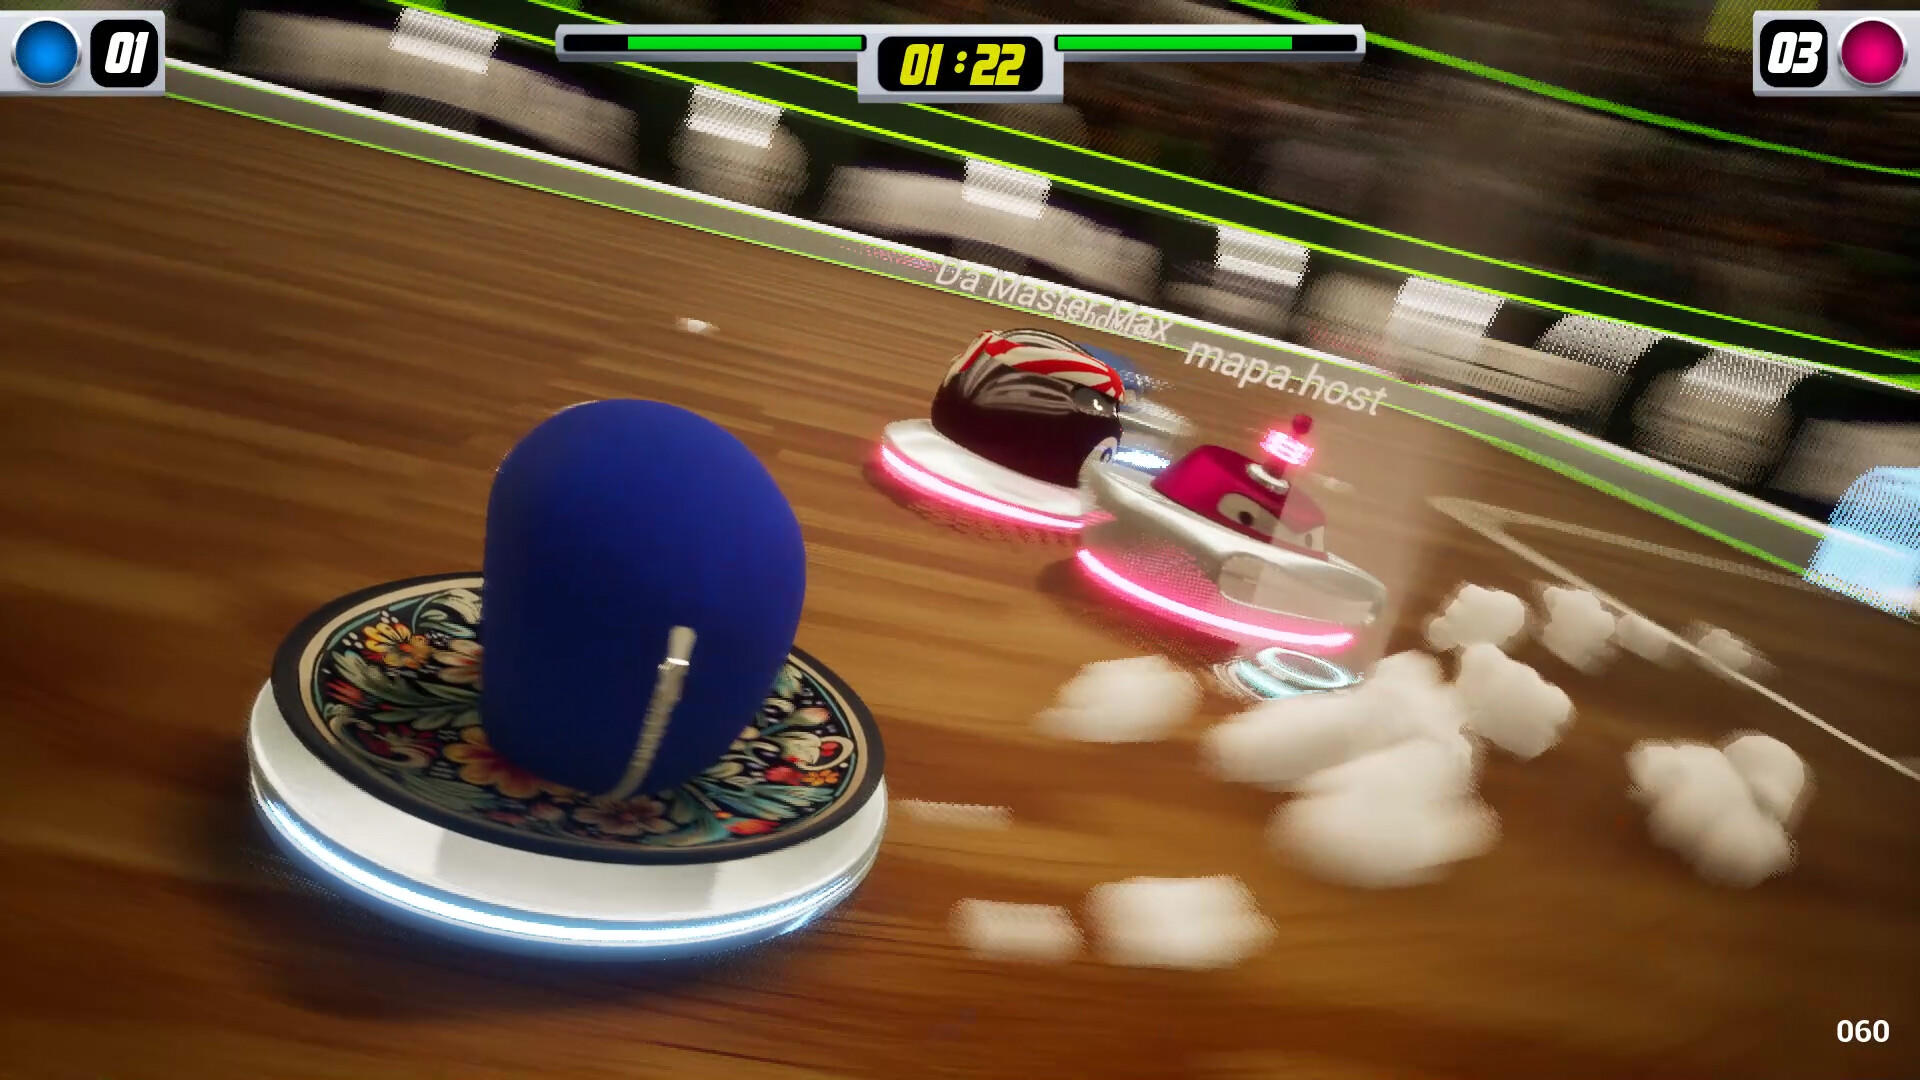 Roomballs screenshot game